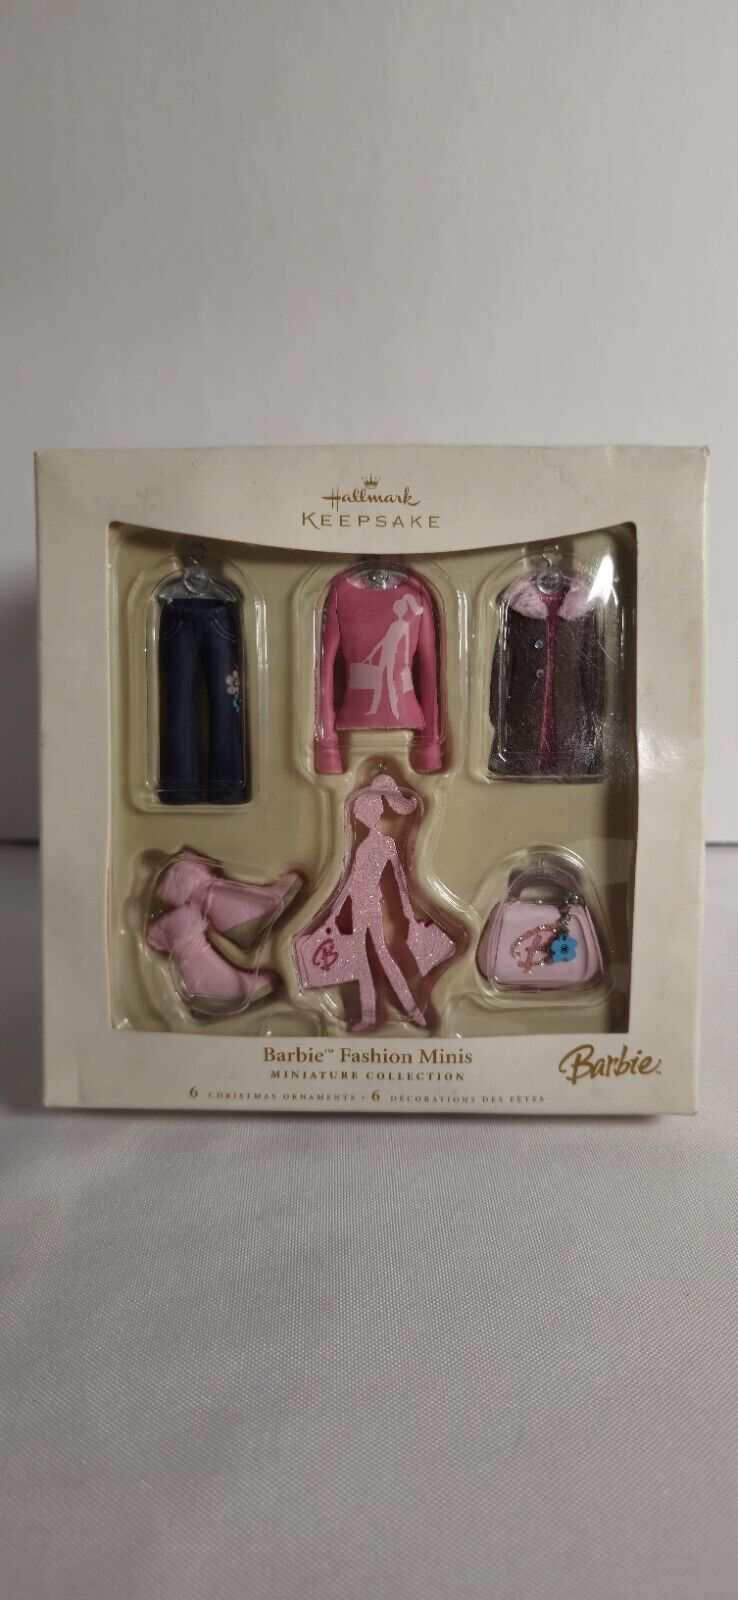 2006 Hallmark Keepsake Ornament Barbie Fashion Minis Set of 6 Miniatures NEW